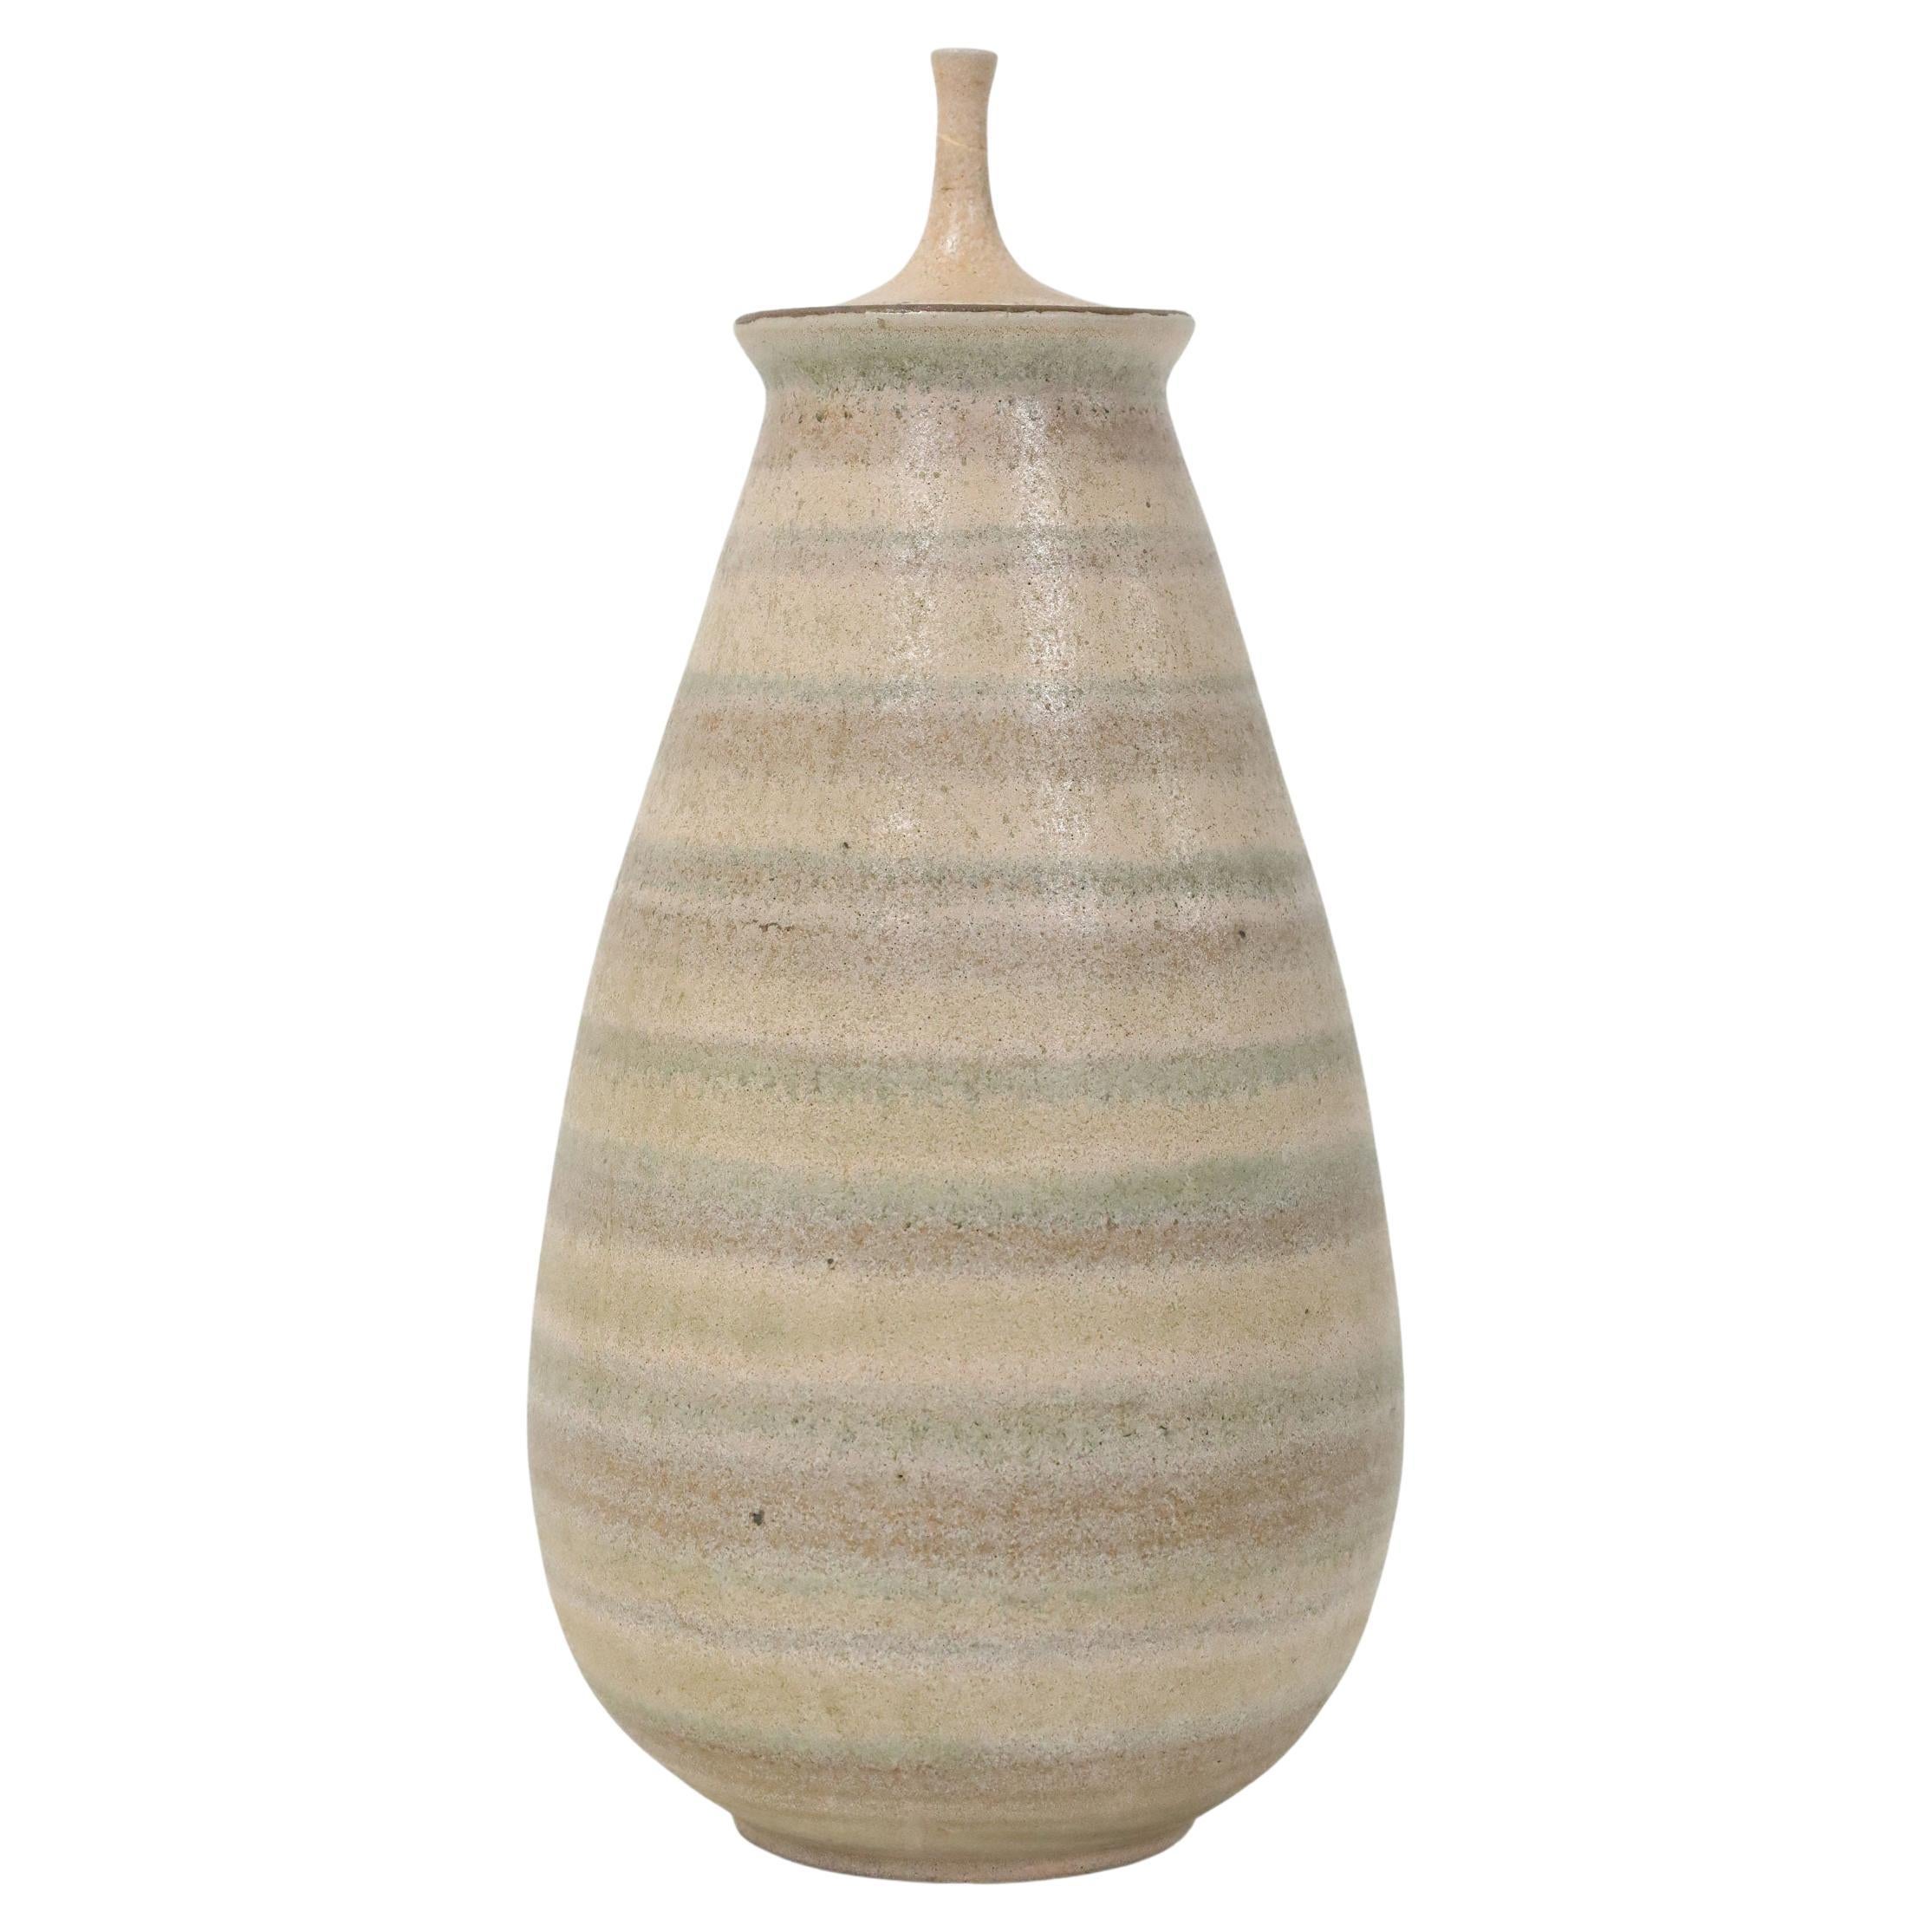 Clyde Burt Ceramic Vase with Lid For Sale